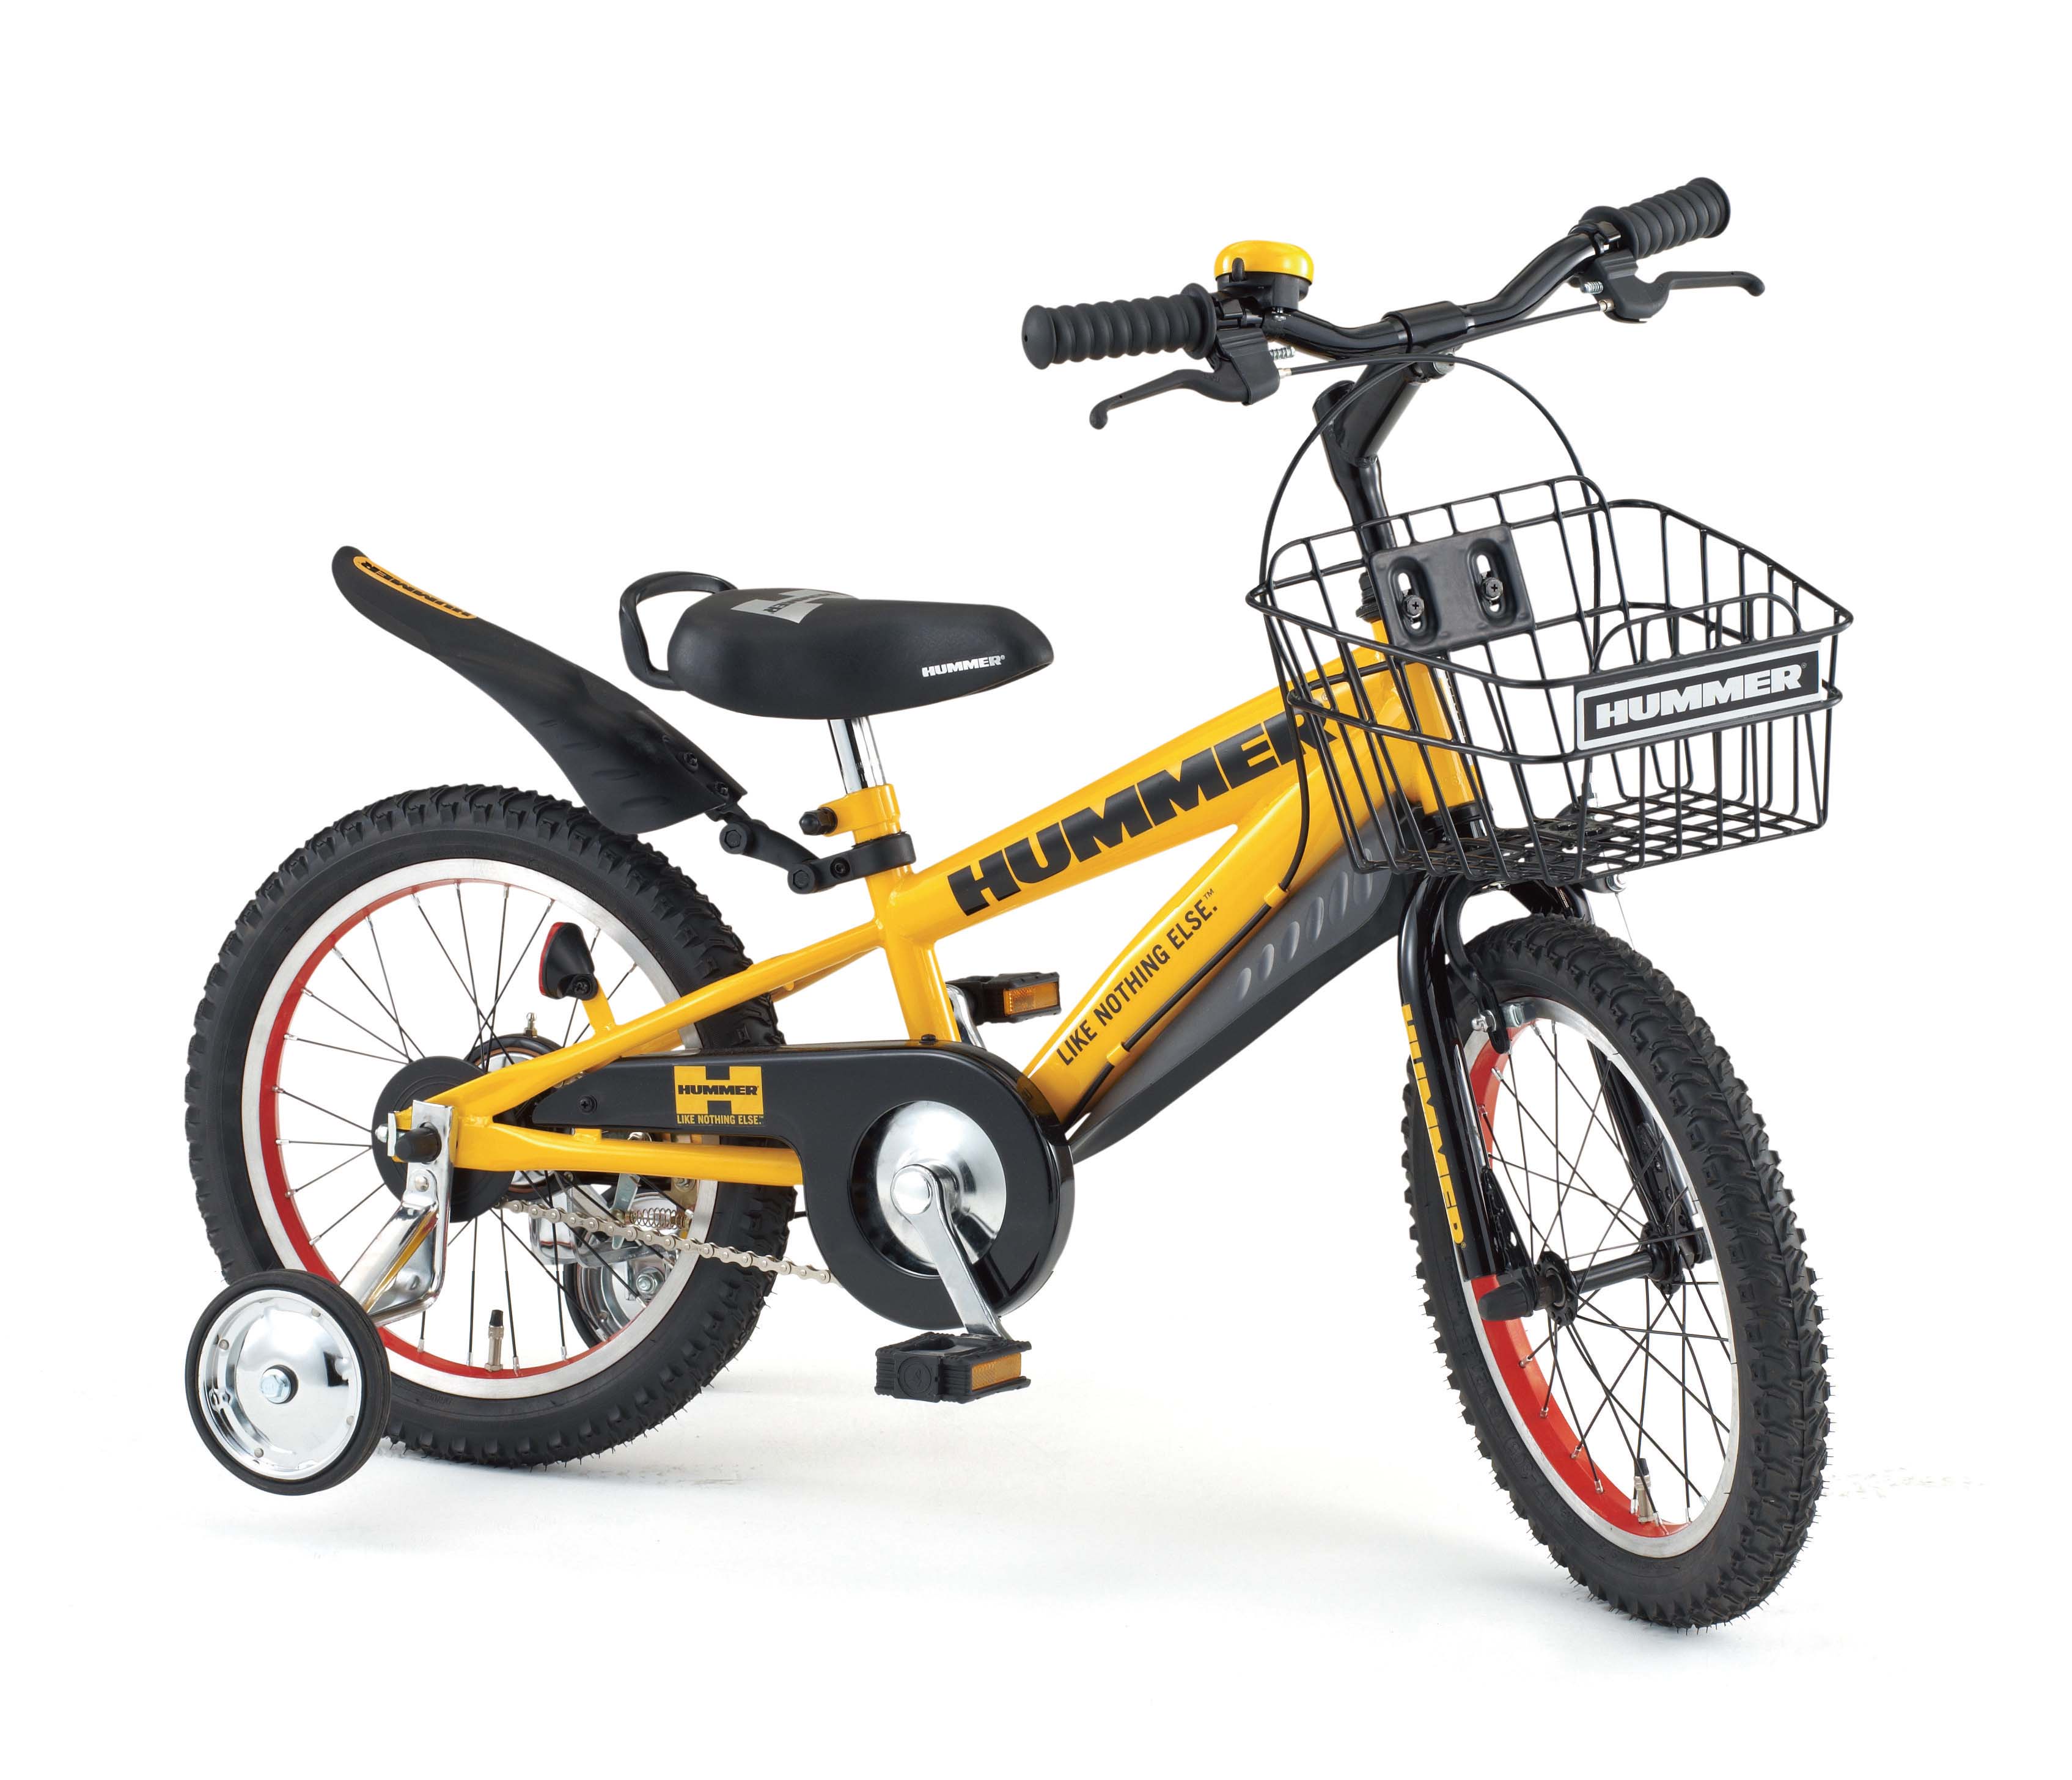 HUMMER（ハマー） 子供用自転車 CHIBI（チビ） 16インチ イエロー 折りたたみ自転車＆ブランド自転車通販